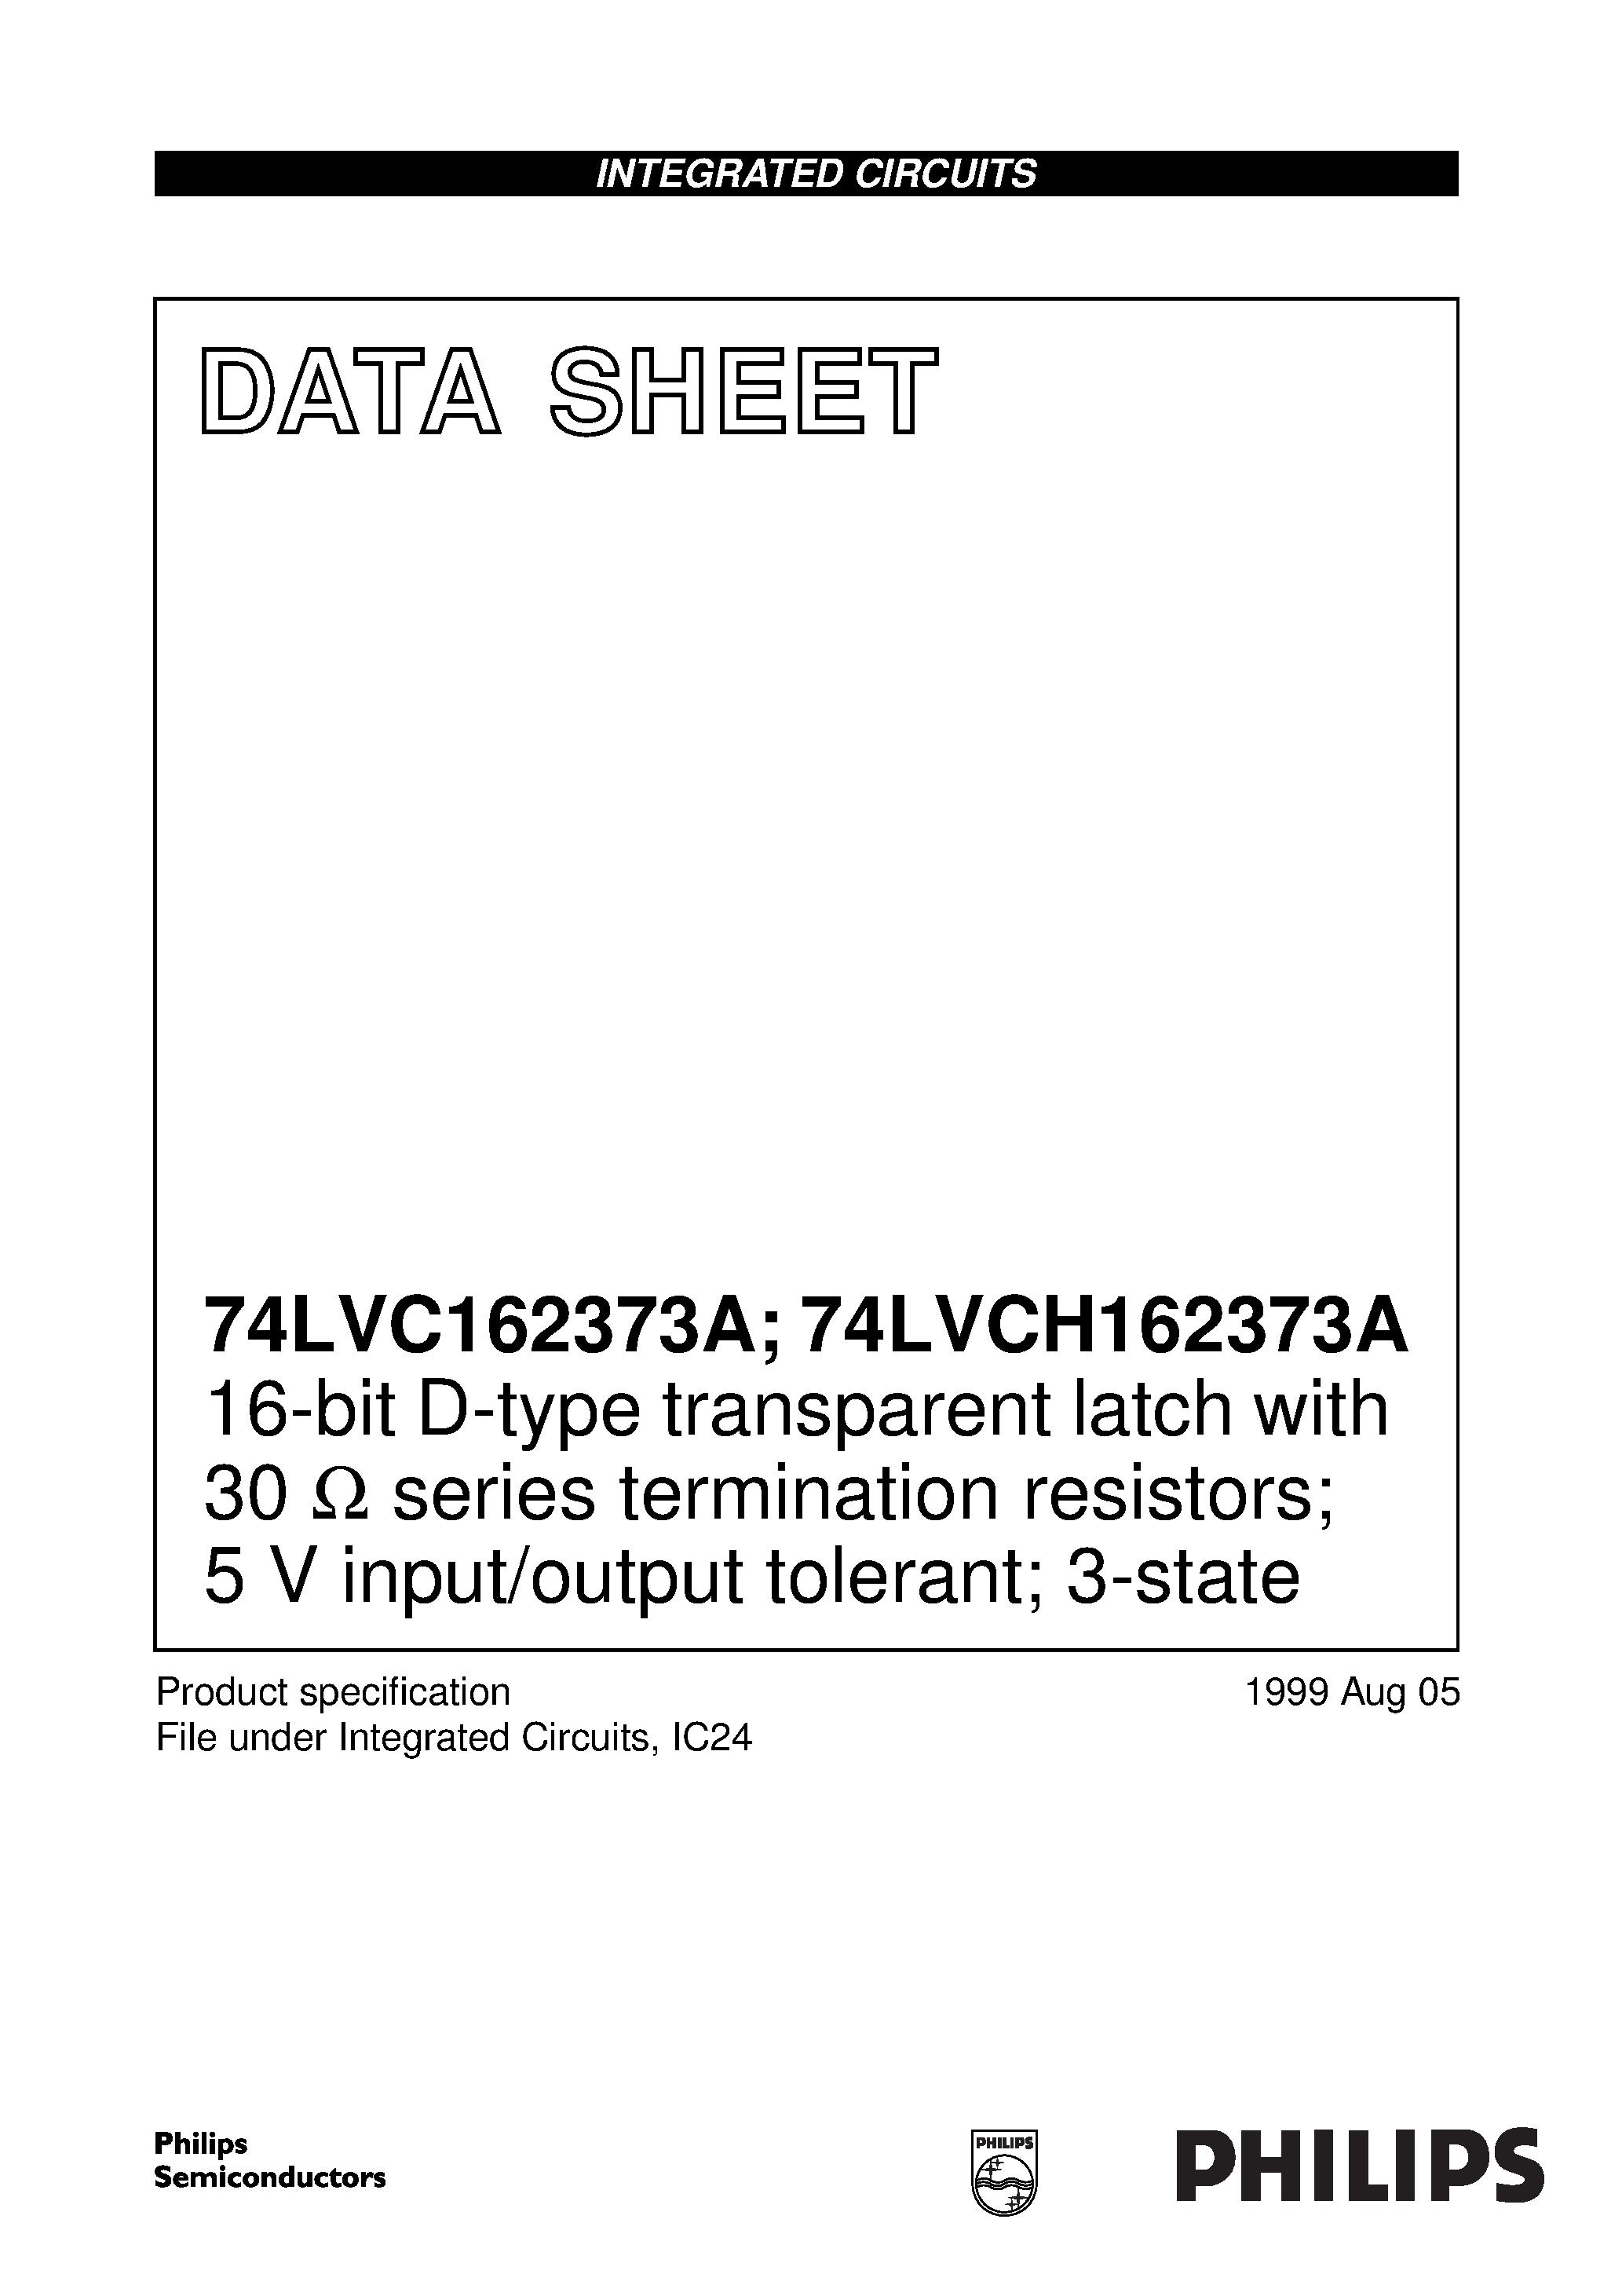 Datasheet VCH162373ADGG - 16-bit D-type transparent latch with 30 ohm series termination resistors; 5 V input/output tolerant; 3-state page 1